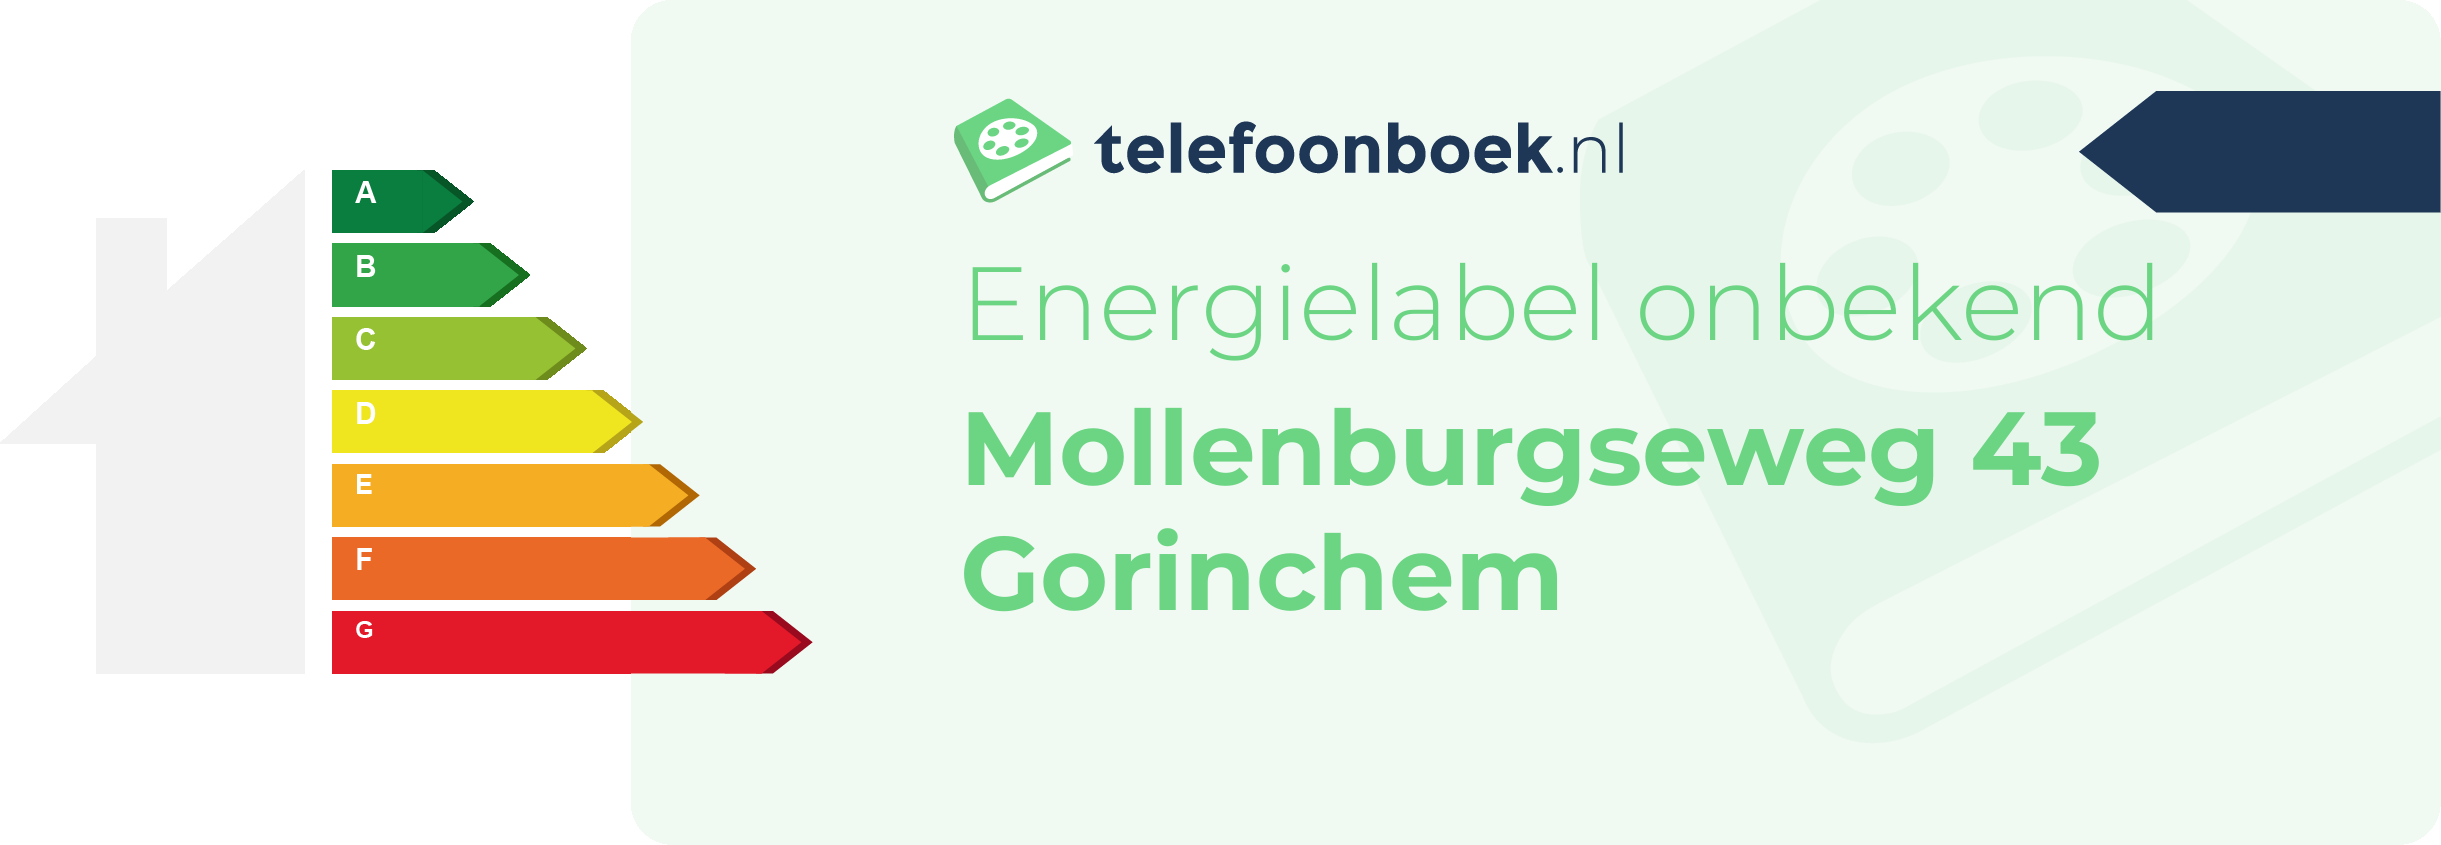 Energielabel Mollenburgseweg 43 Gorinchem